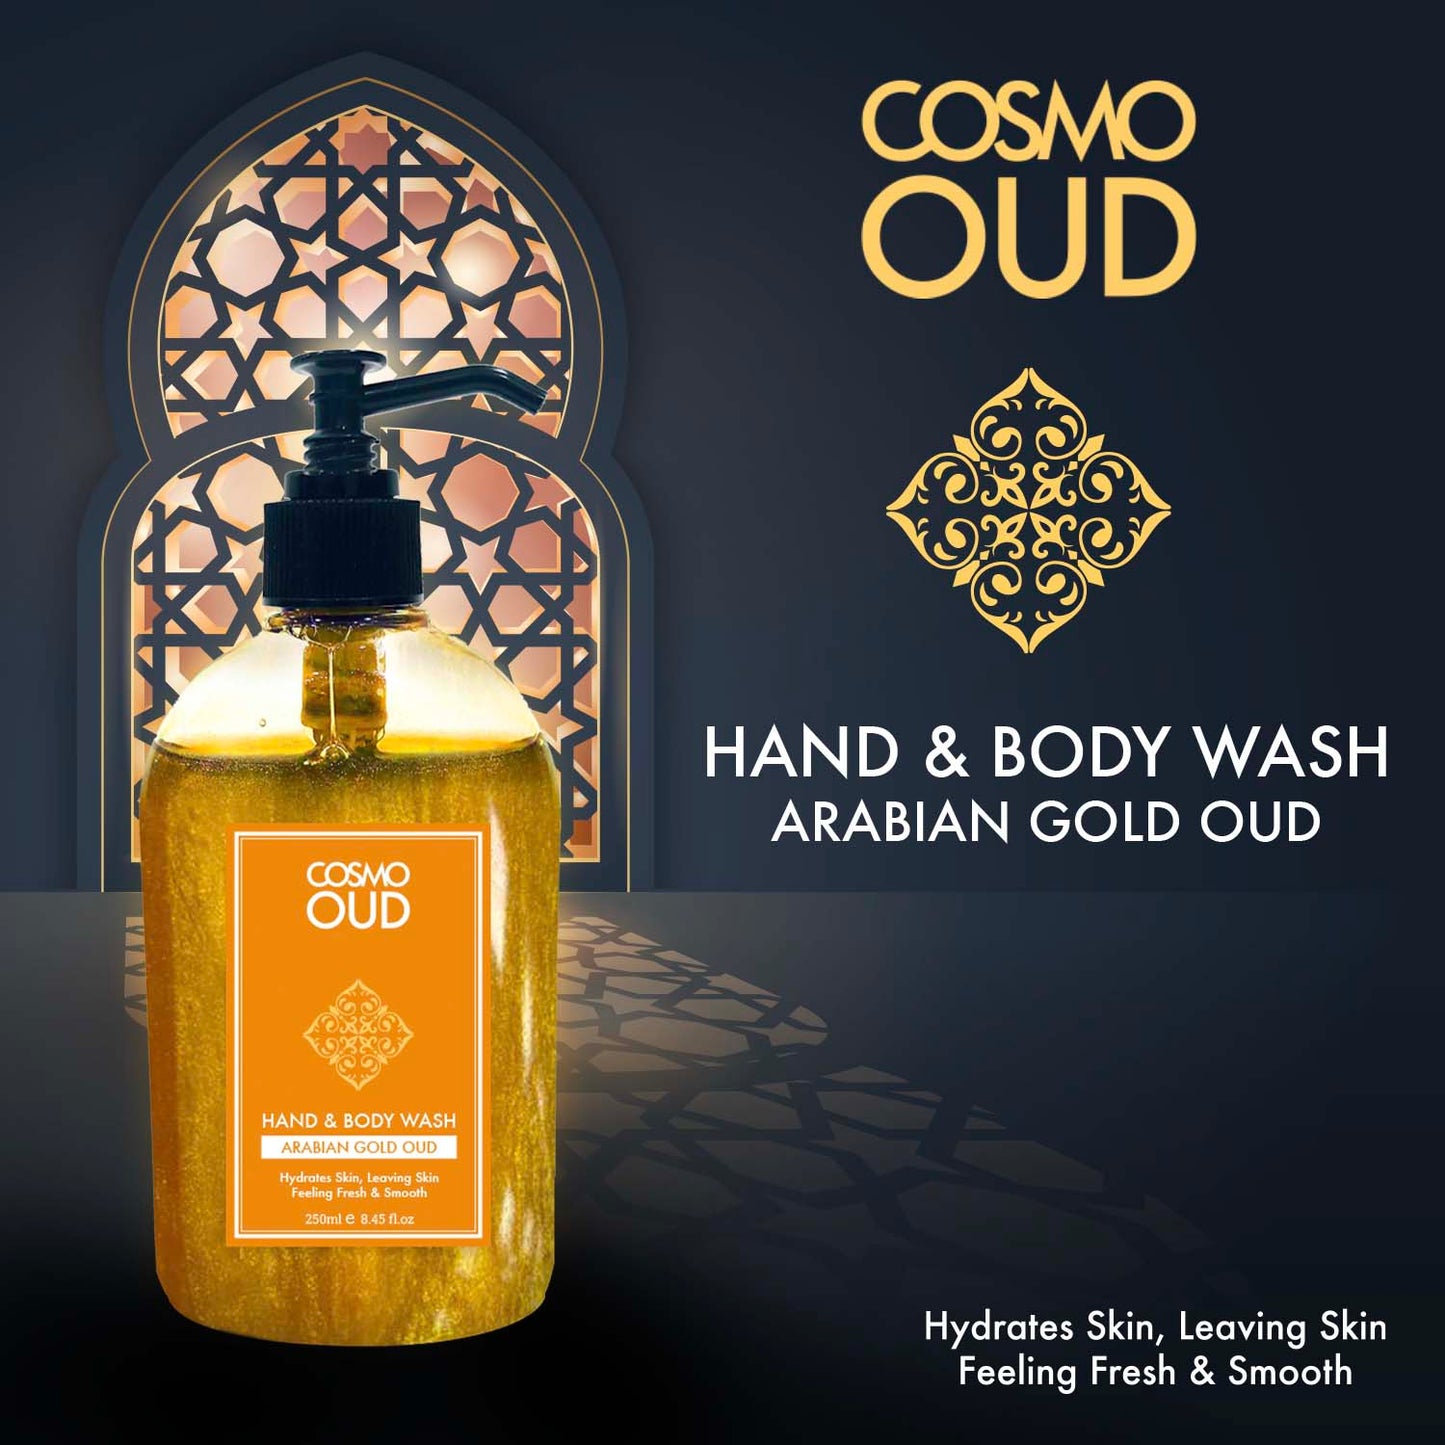 ARABIAN GOLD OUD - HAND & BODY WASH